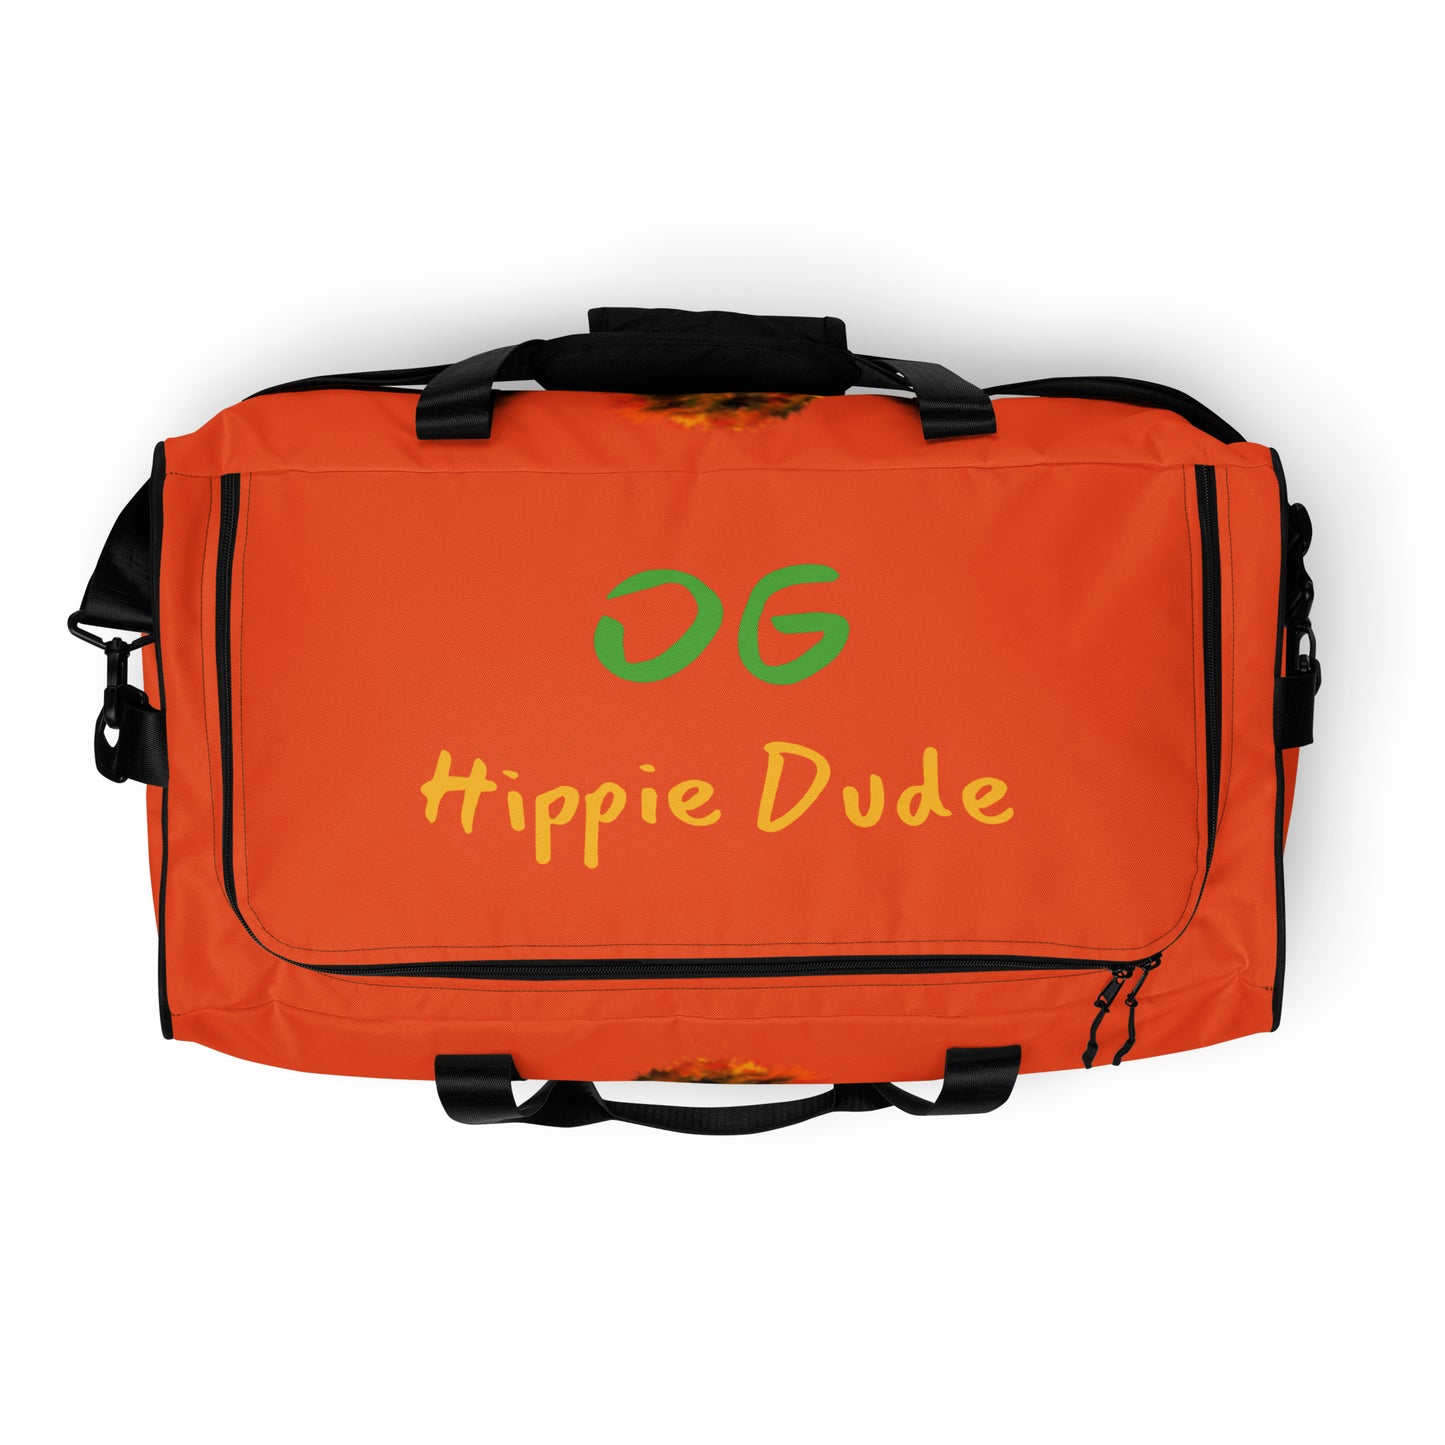 Orange Duffle Bag - OG Hippie Dude